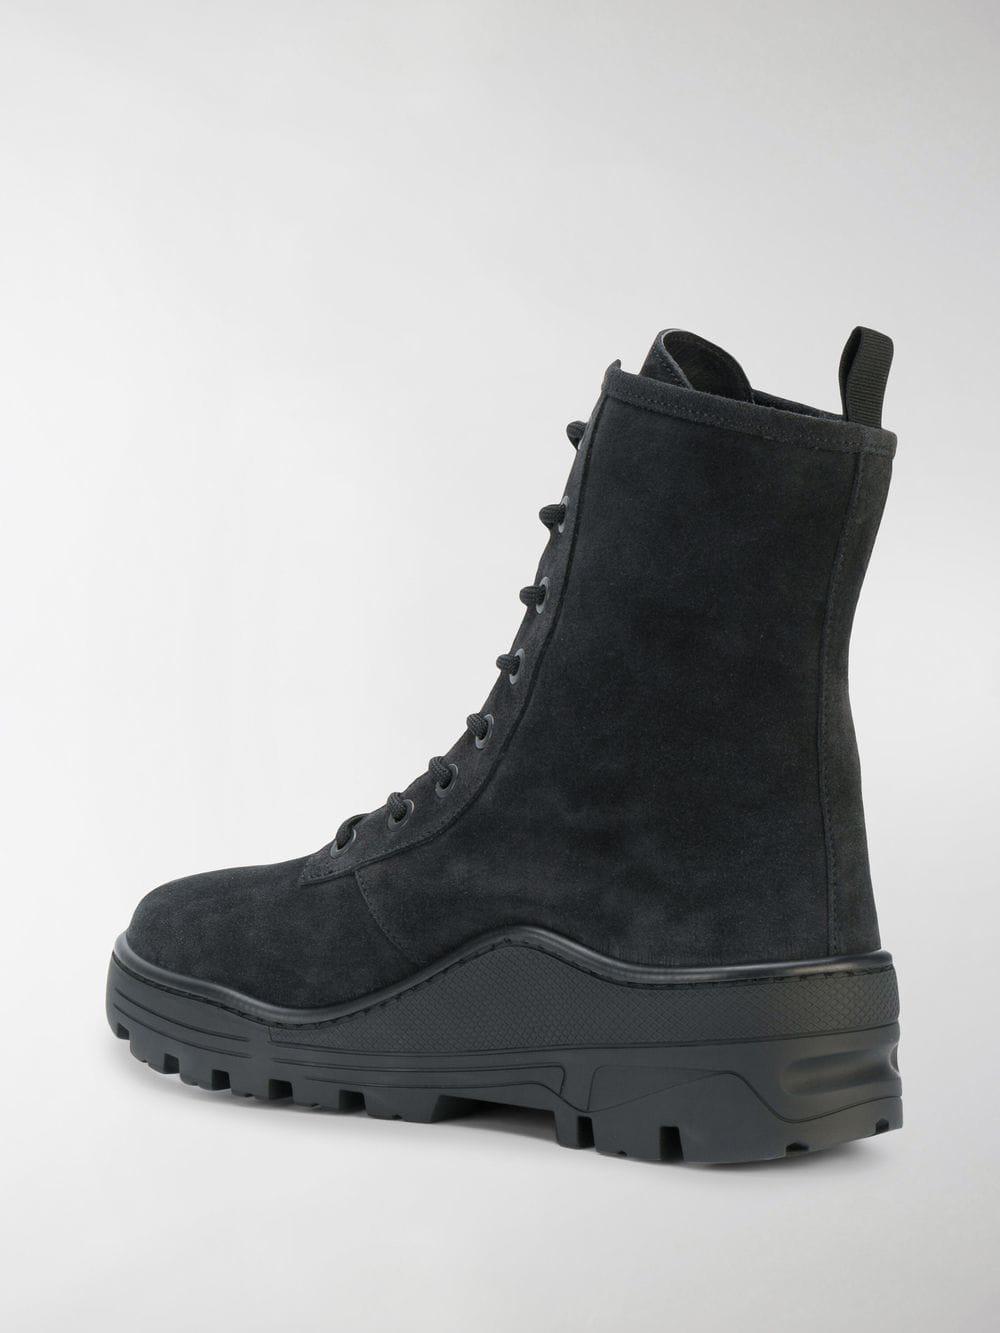 yeezy black combat boots